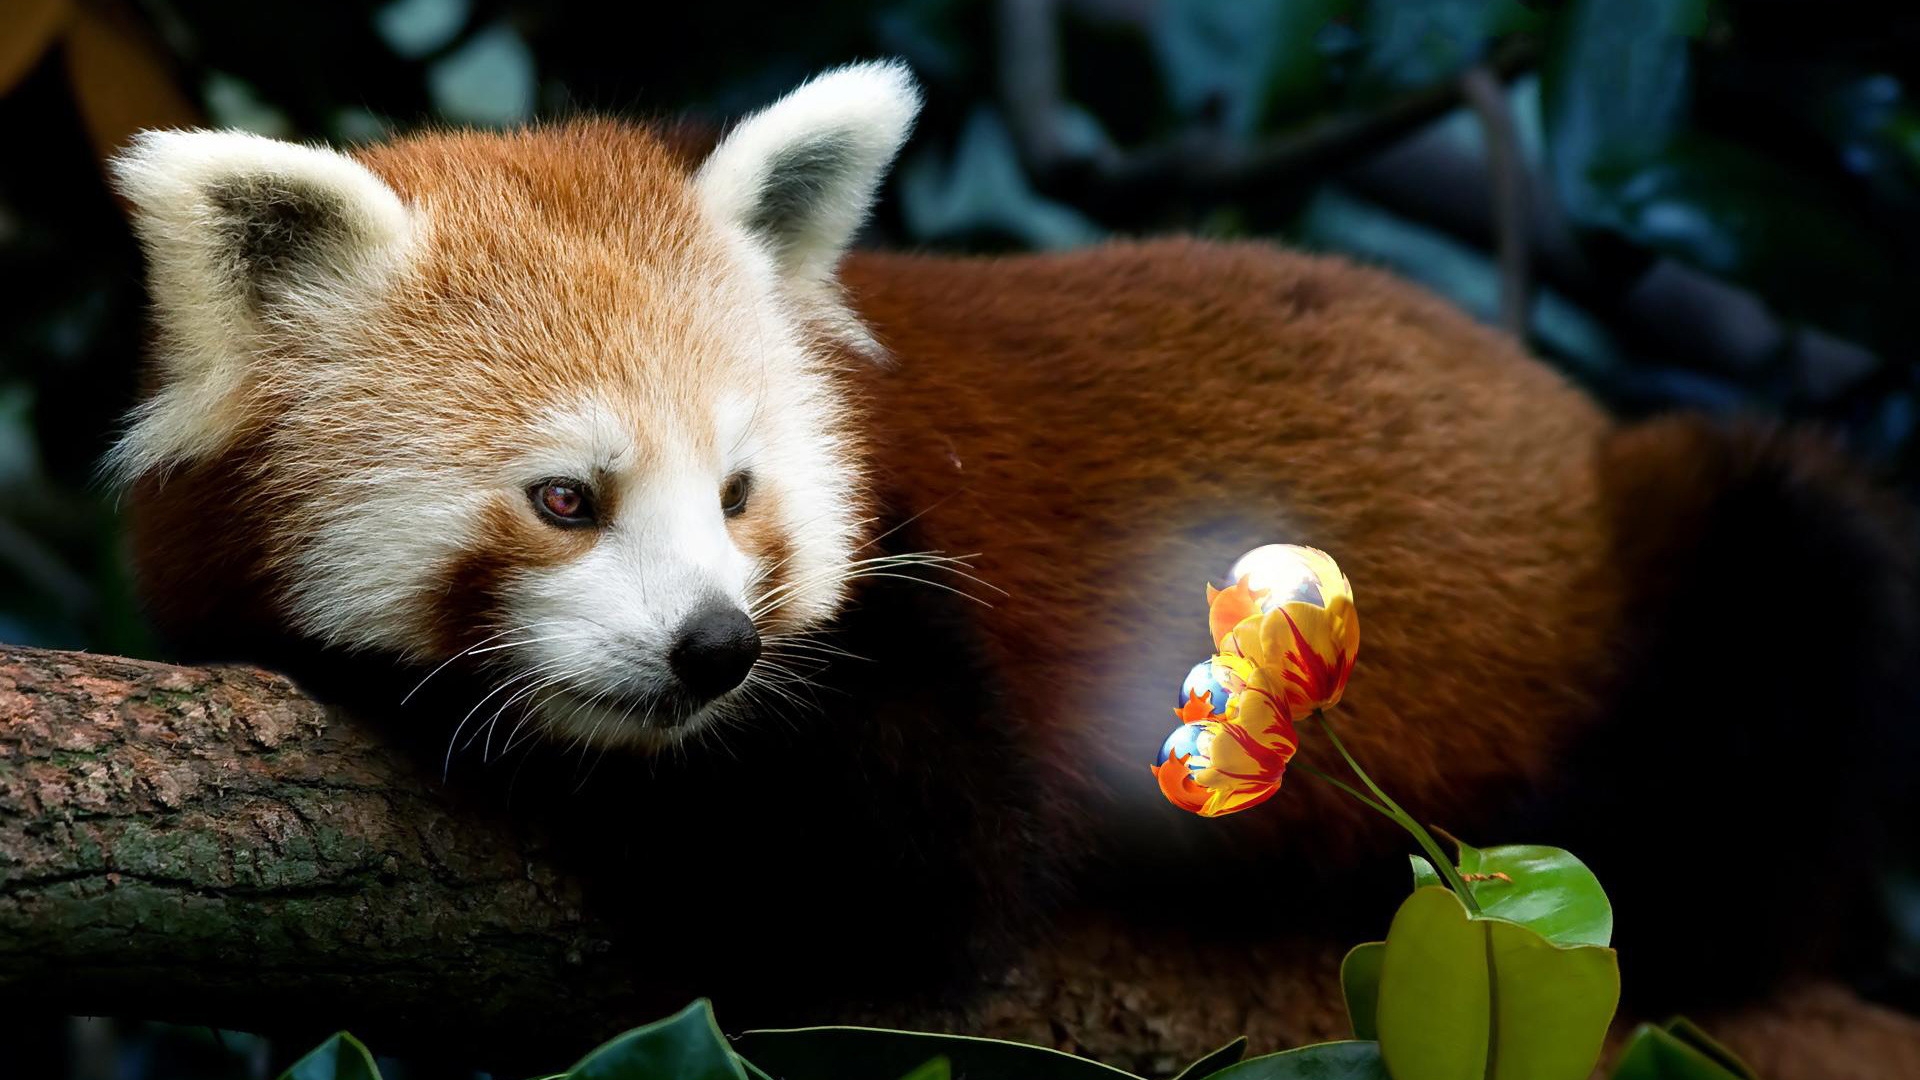 Red Panda Firefox for 1920 x 1080 HDTV 1080p resolution